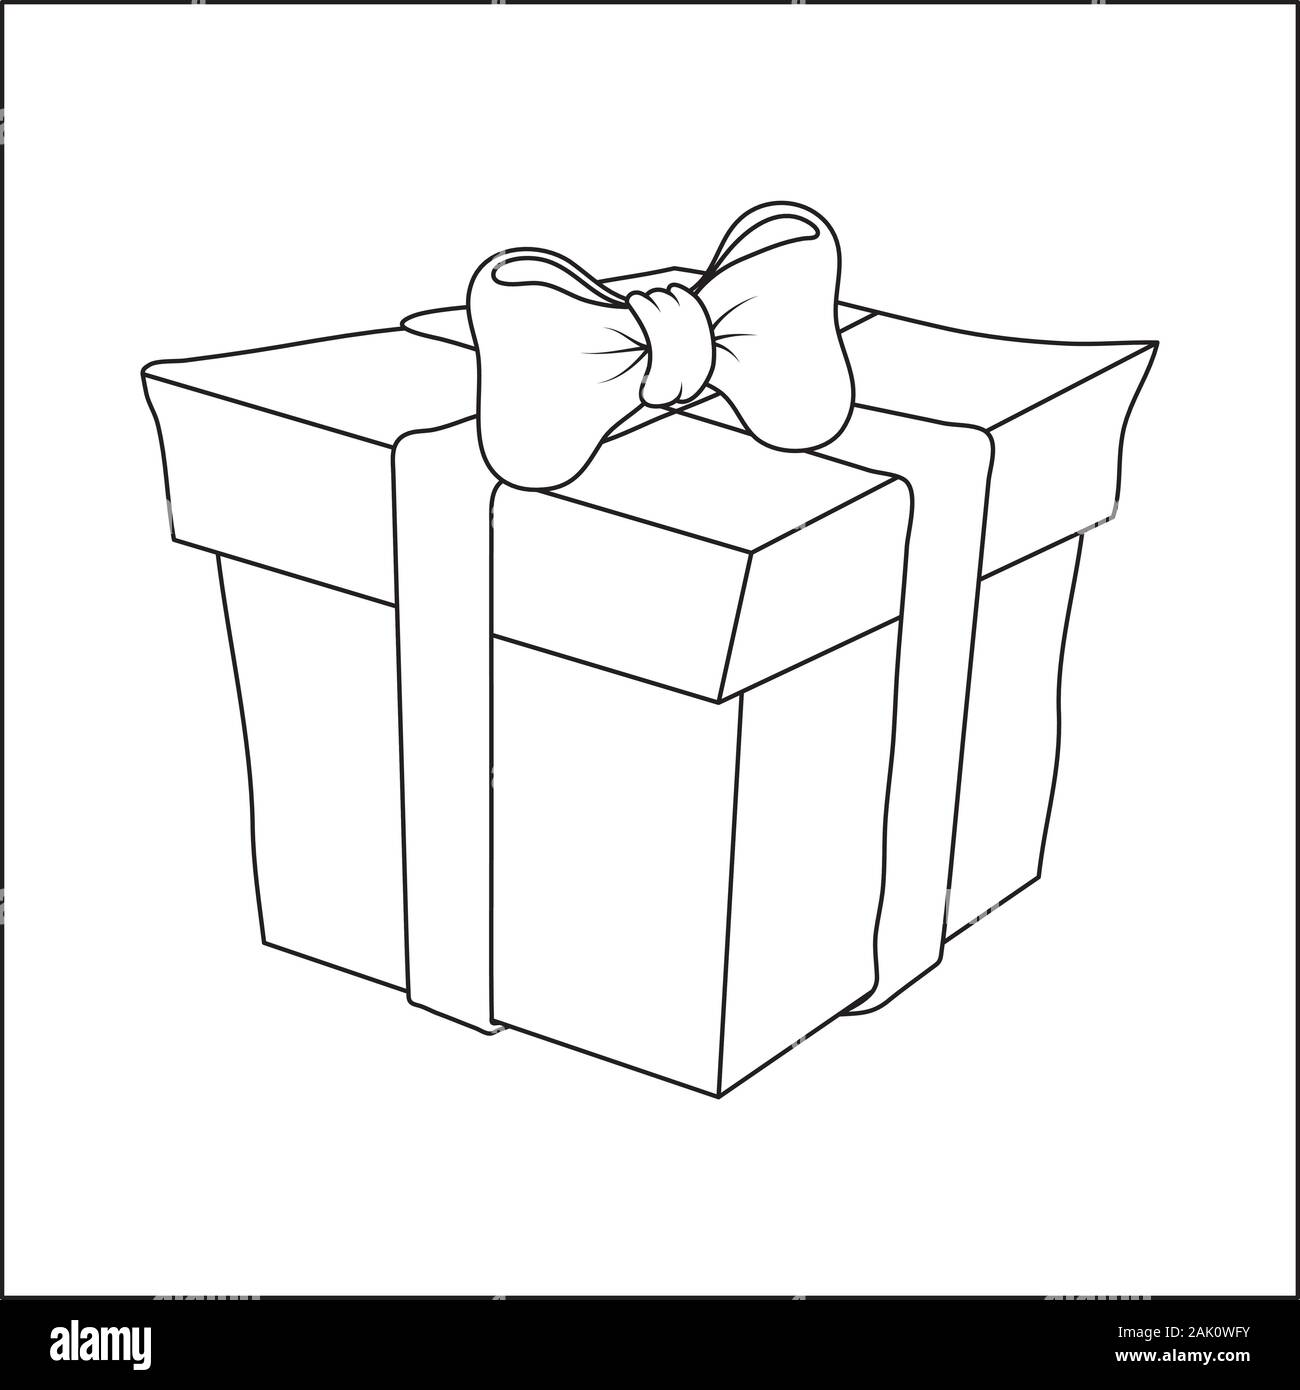 Open Box Coloring Page - Caja De Carton Para Colorear - Free